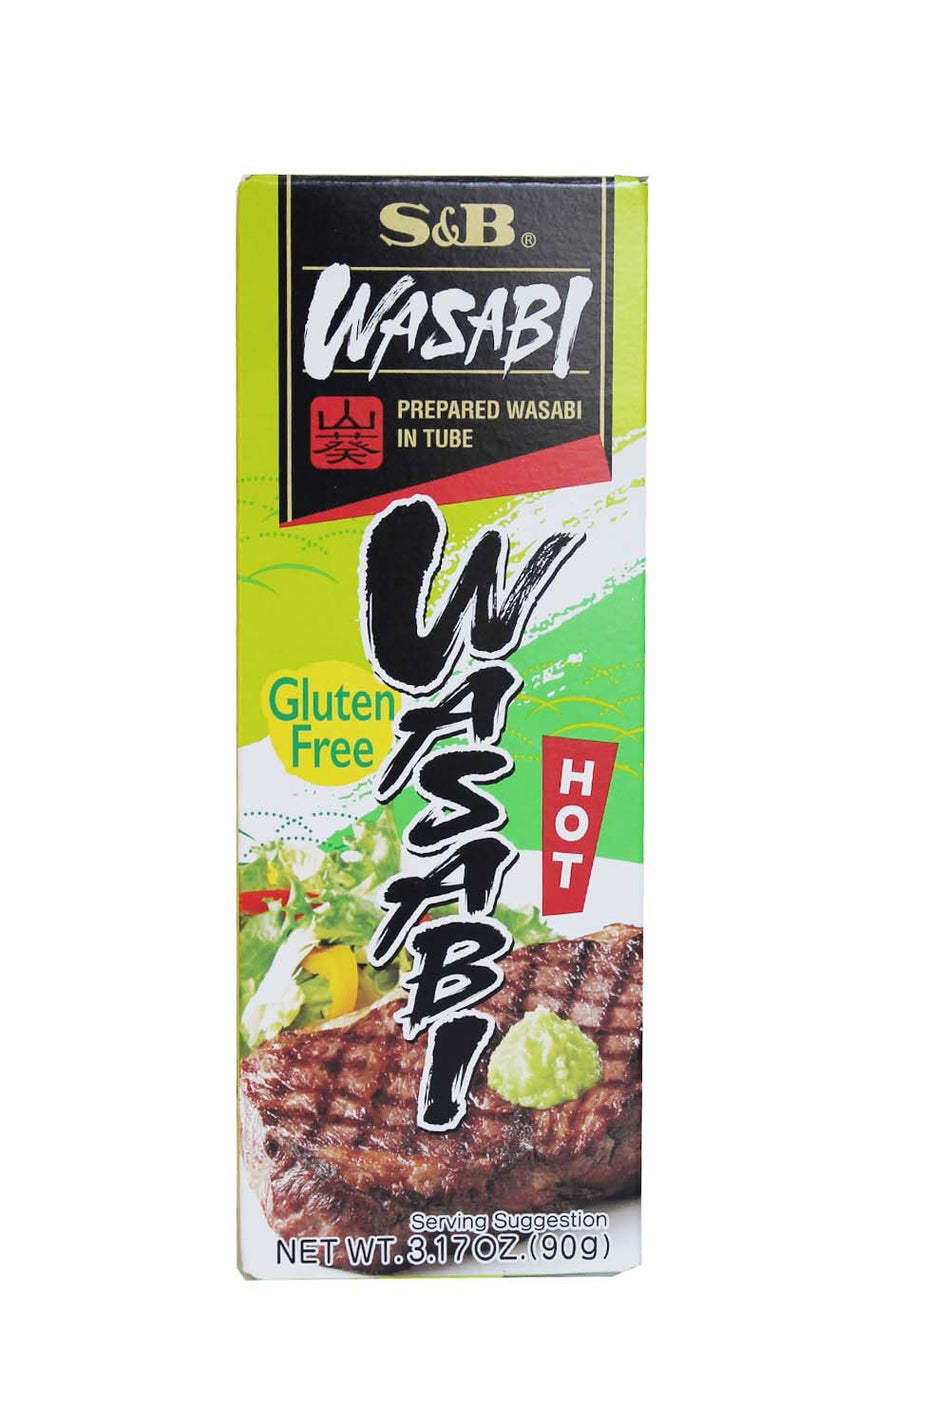 S&B Gluten Free Wasabi